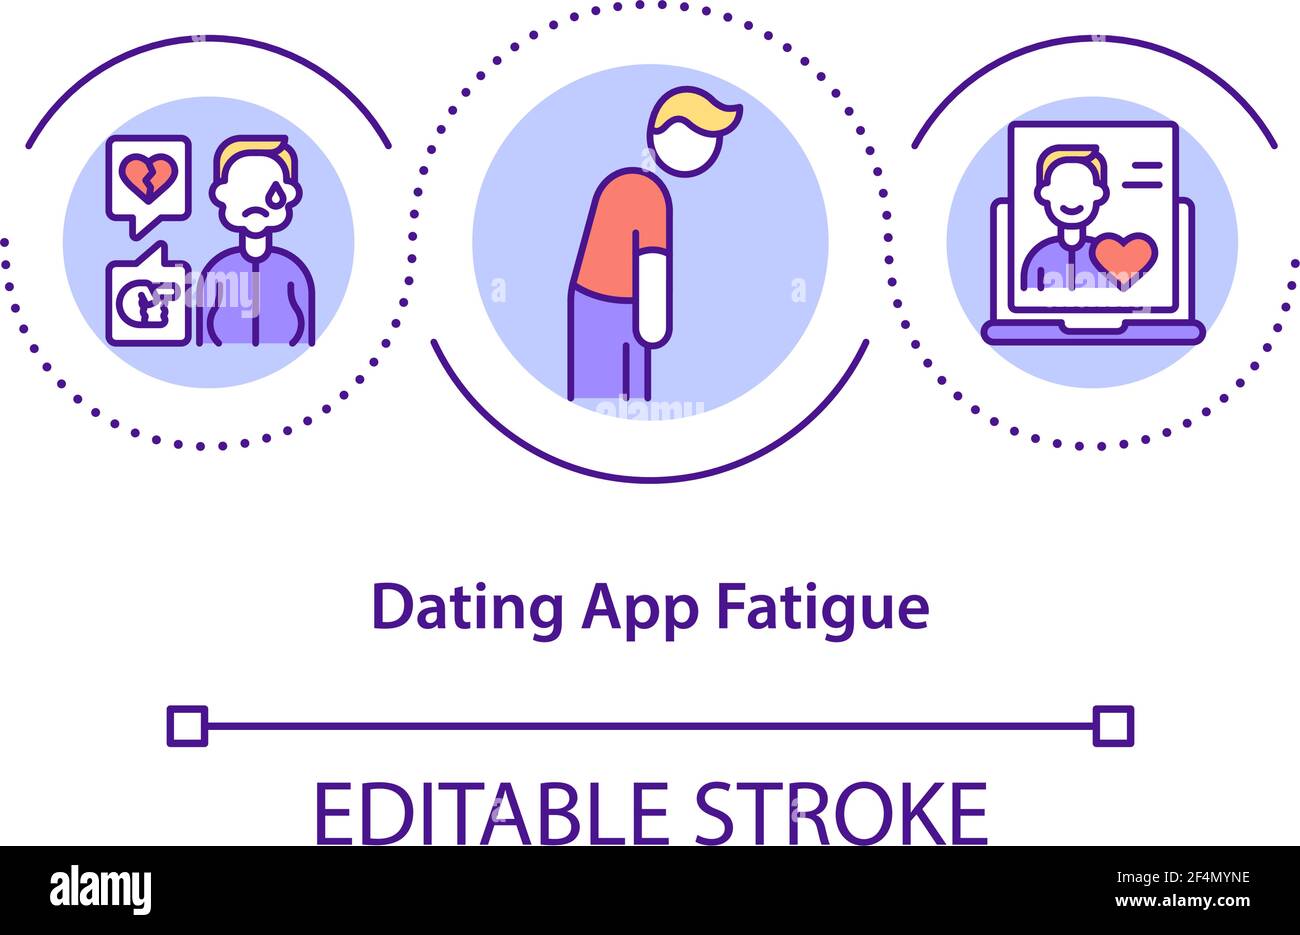 Dating app fatigue concept icon Stock Vector